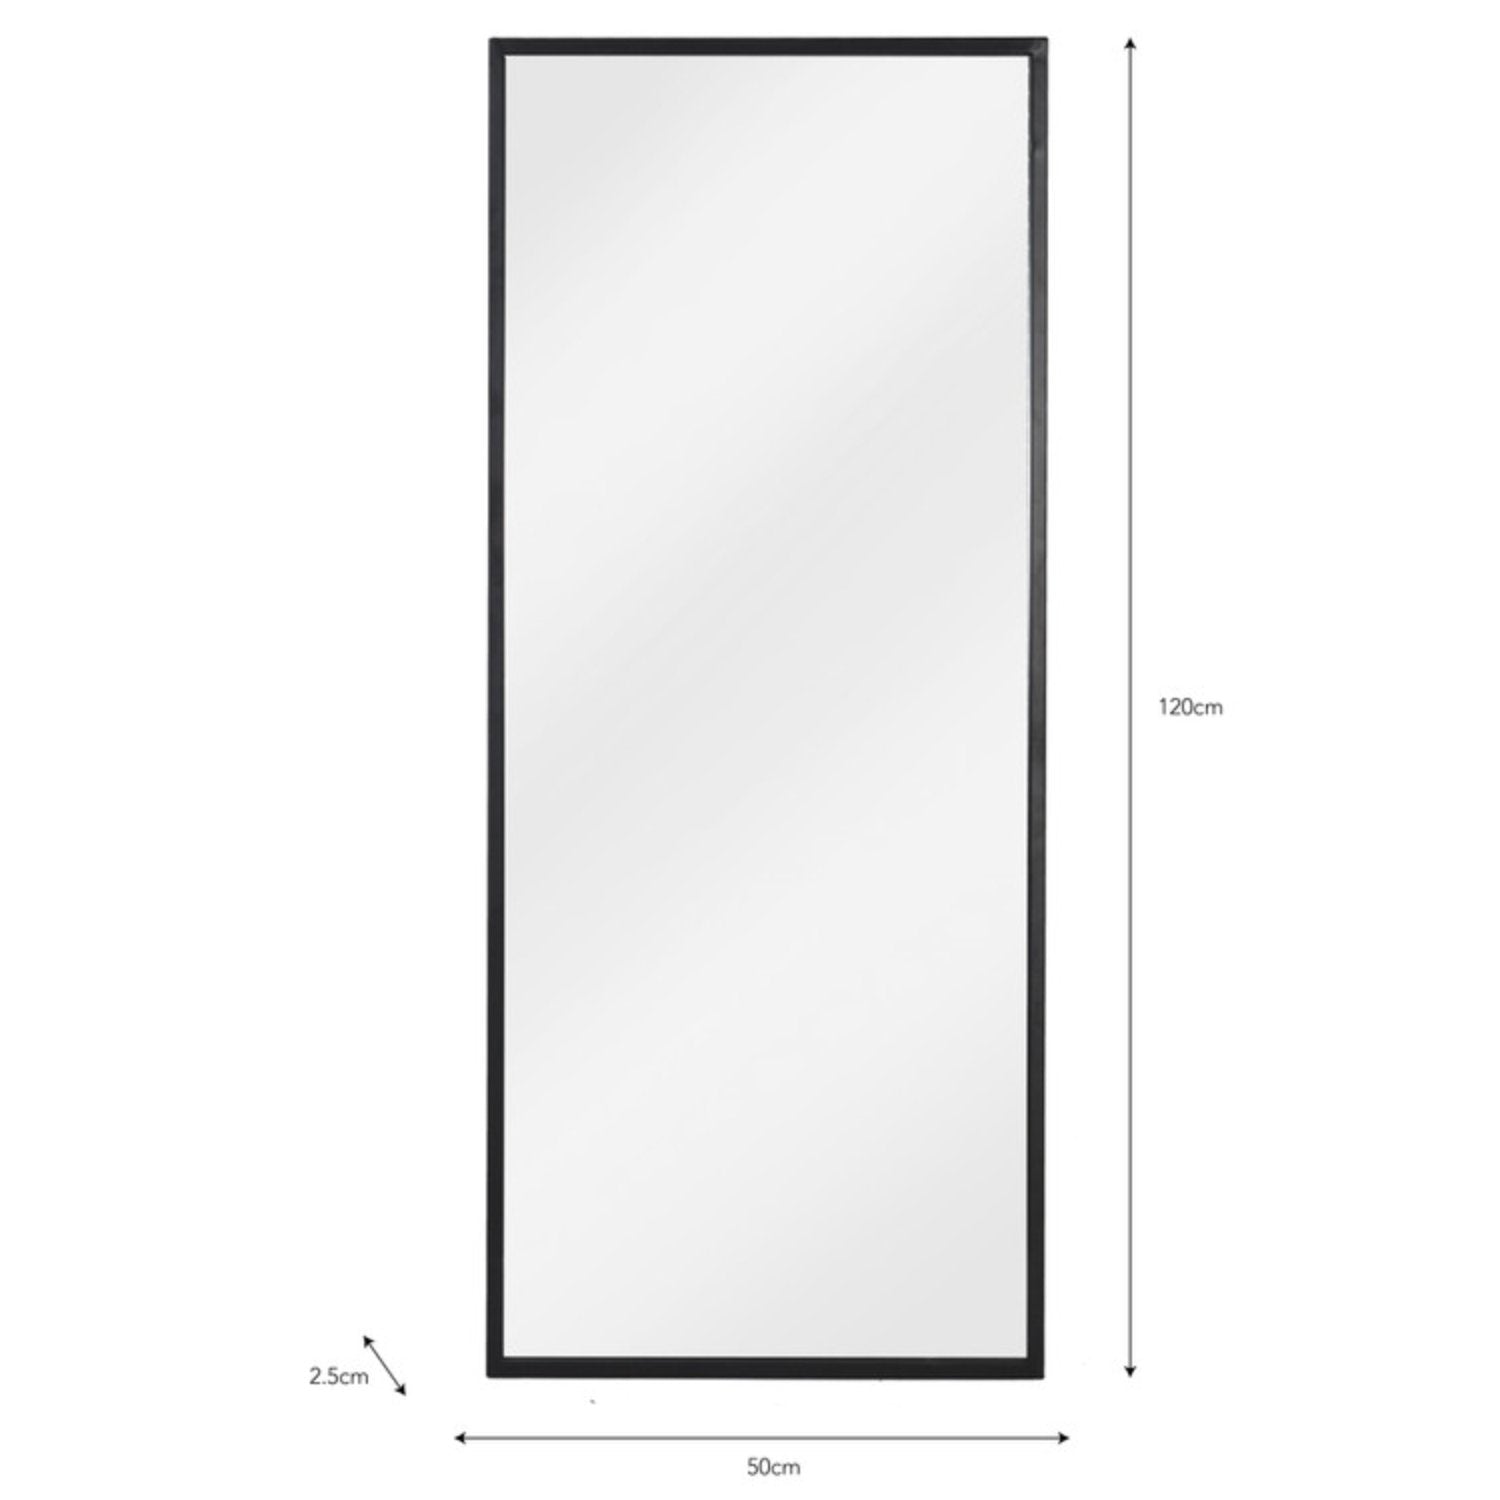 Avening Rectangular Wall Mirror 50x120cm by Garden Trading - Iron